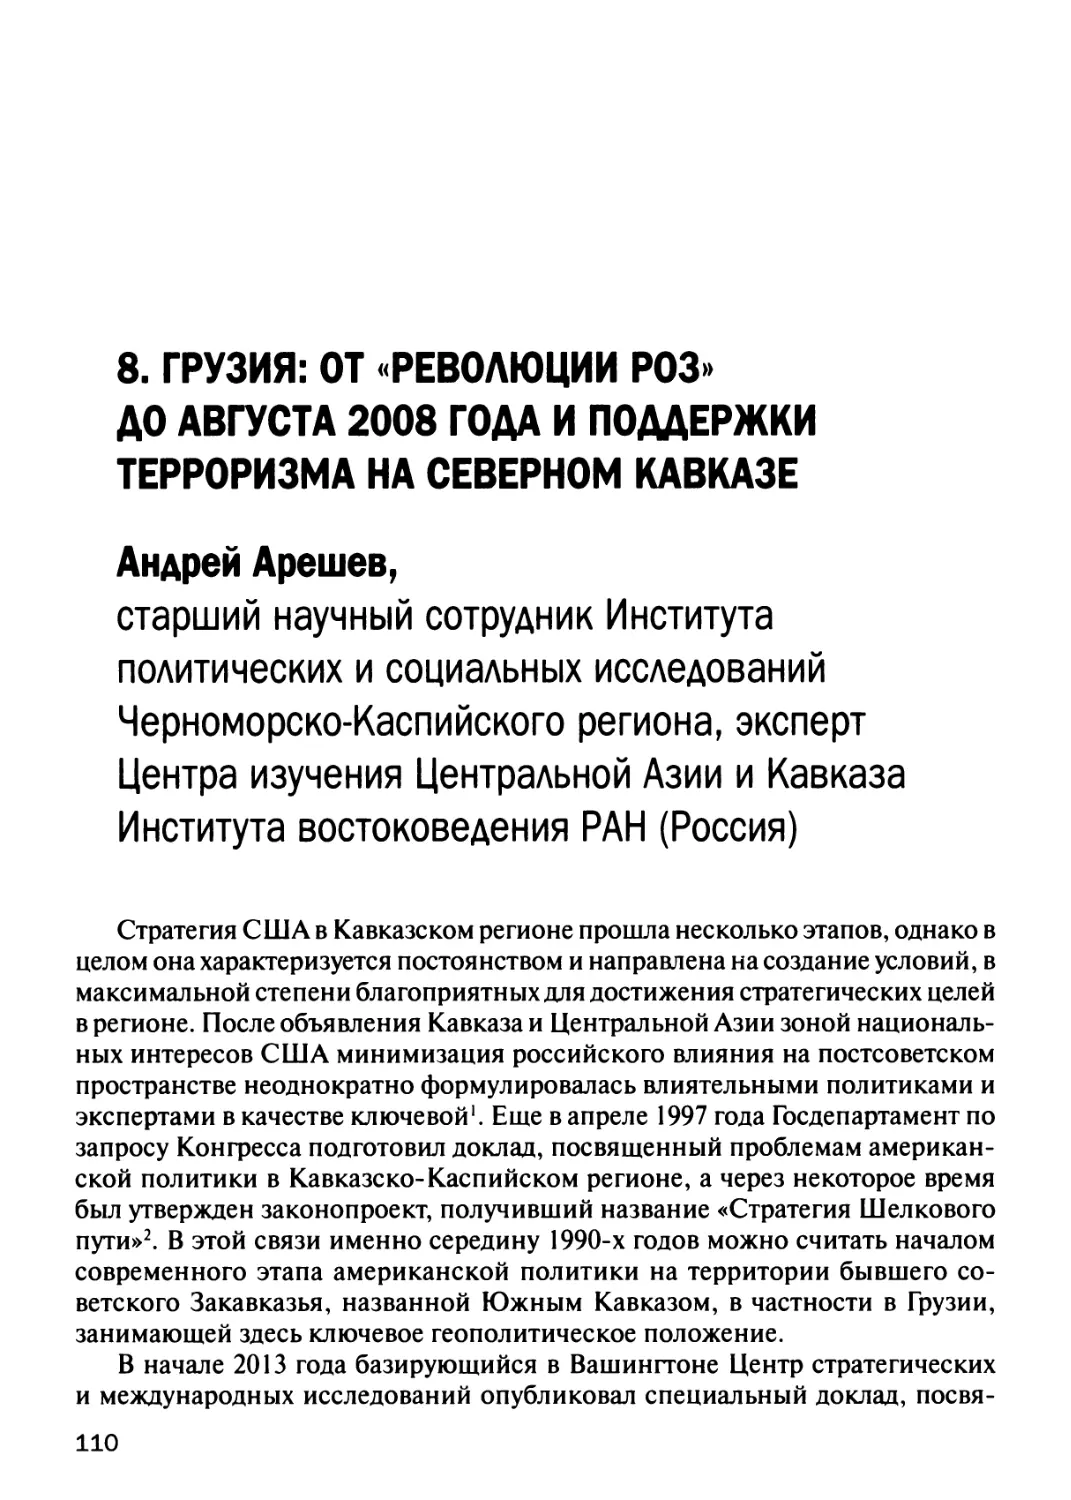 8. Грузия: от «революции роз» до августа 2008 года и поддержки терроризма на Северном Кавказе